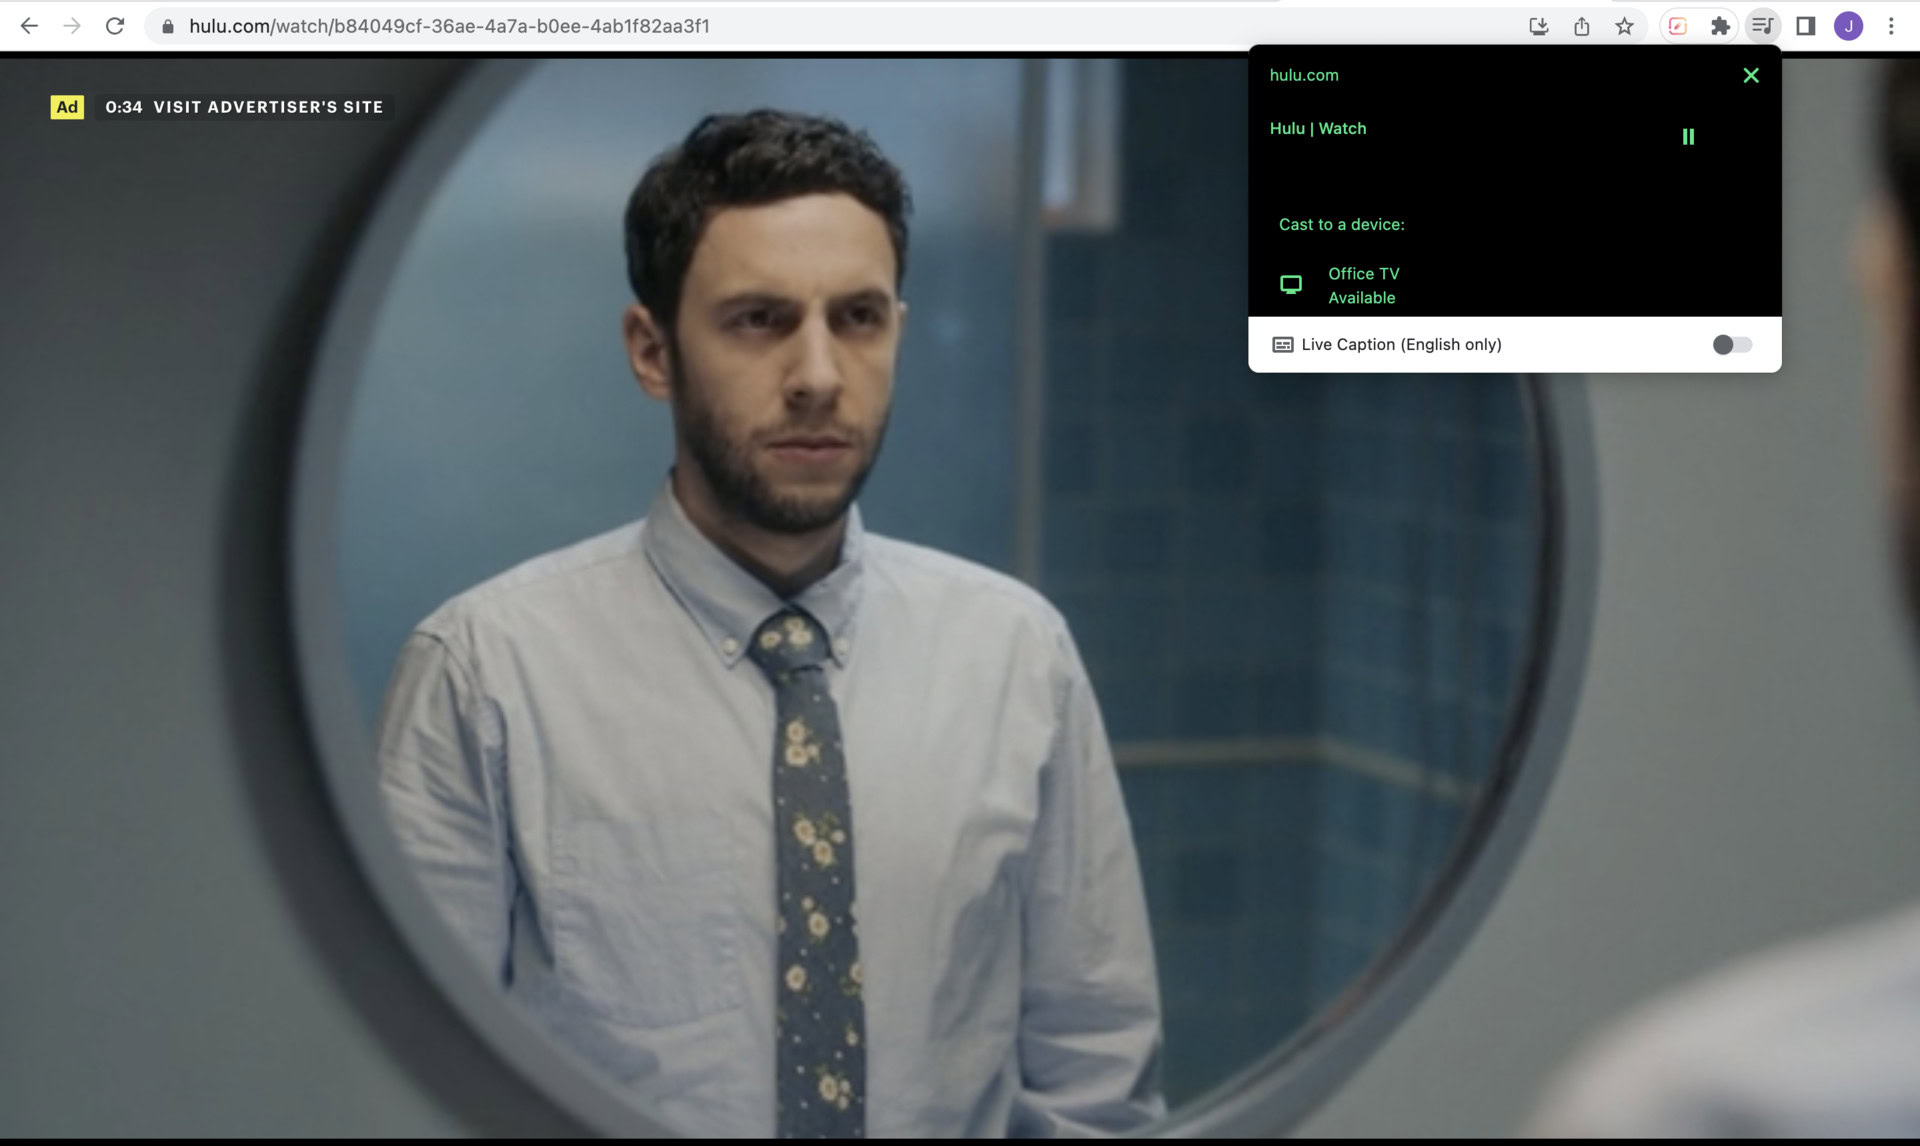 How to watch Hulu on Chromecast using the website 2